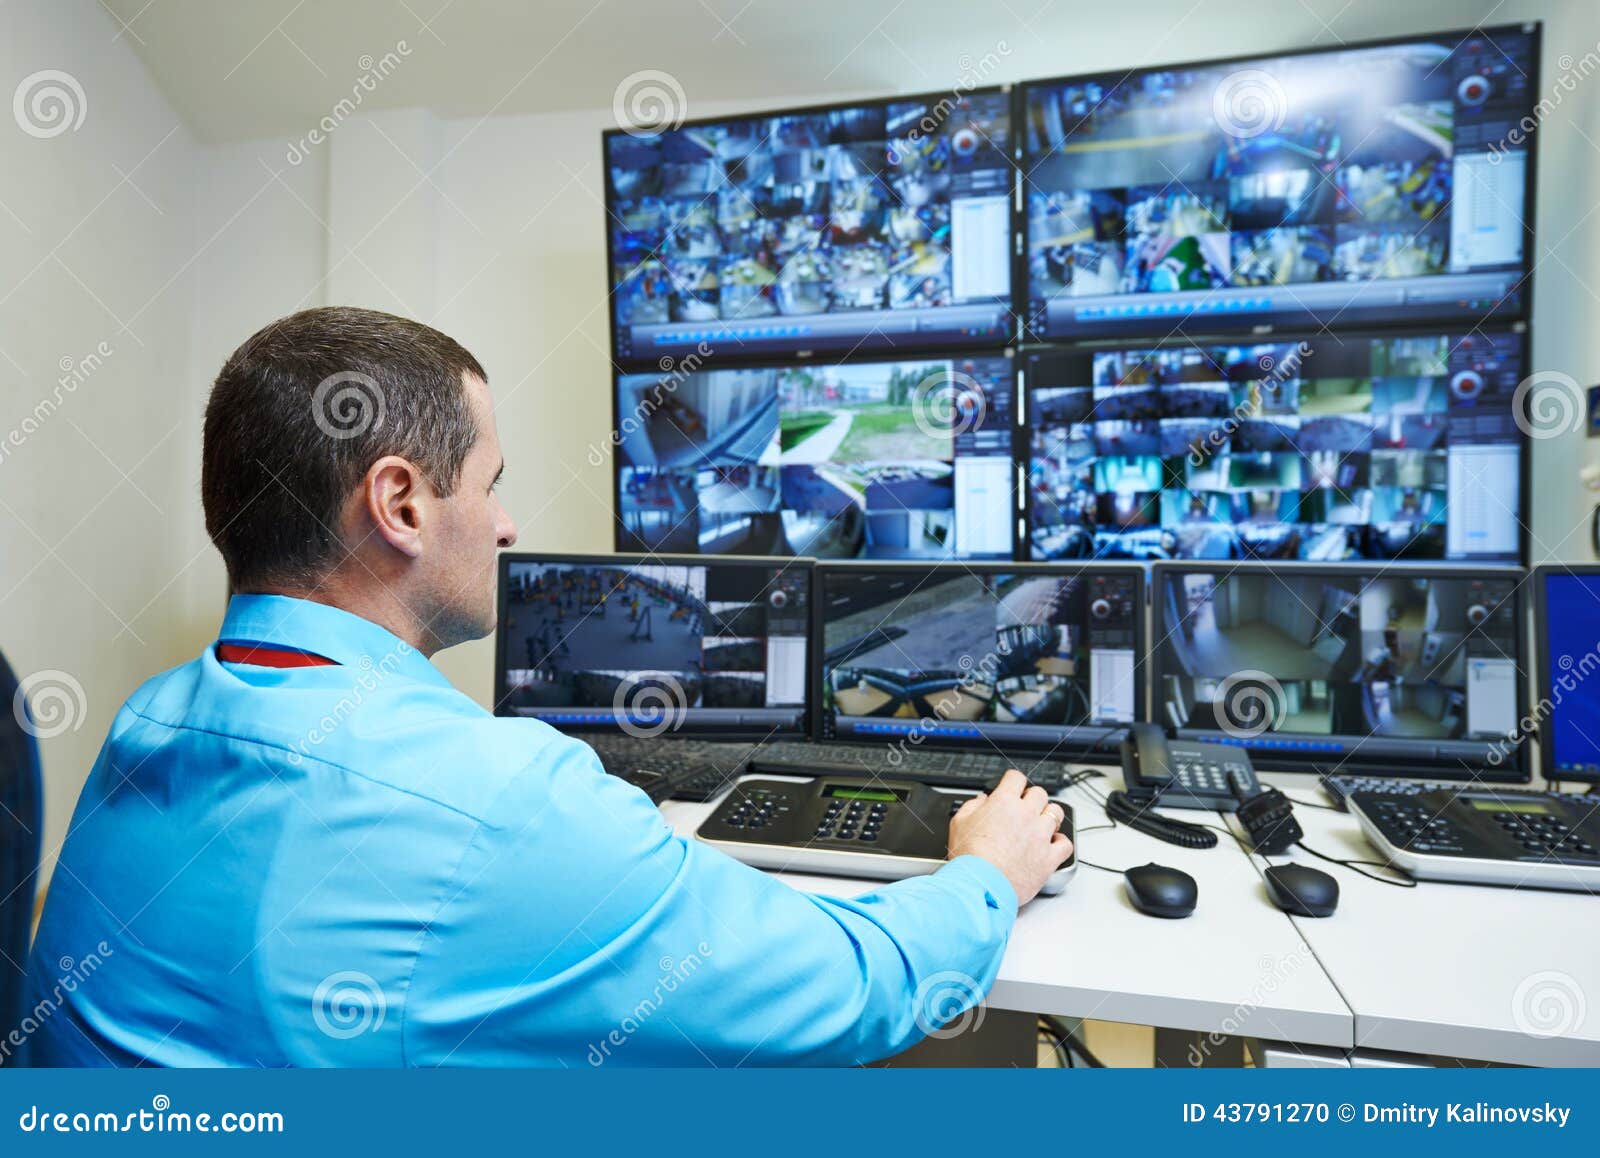 security video surveillance